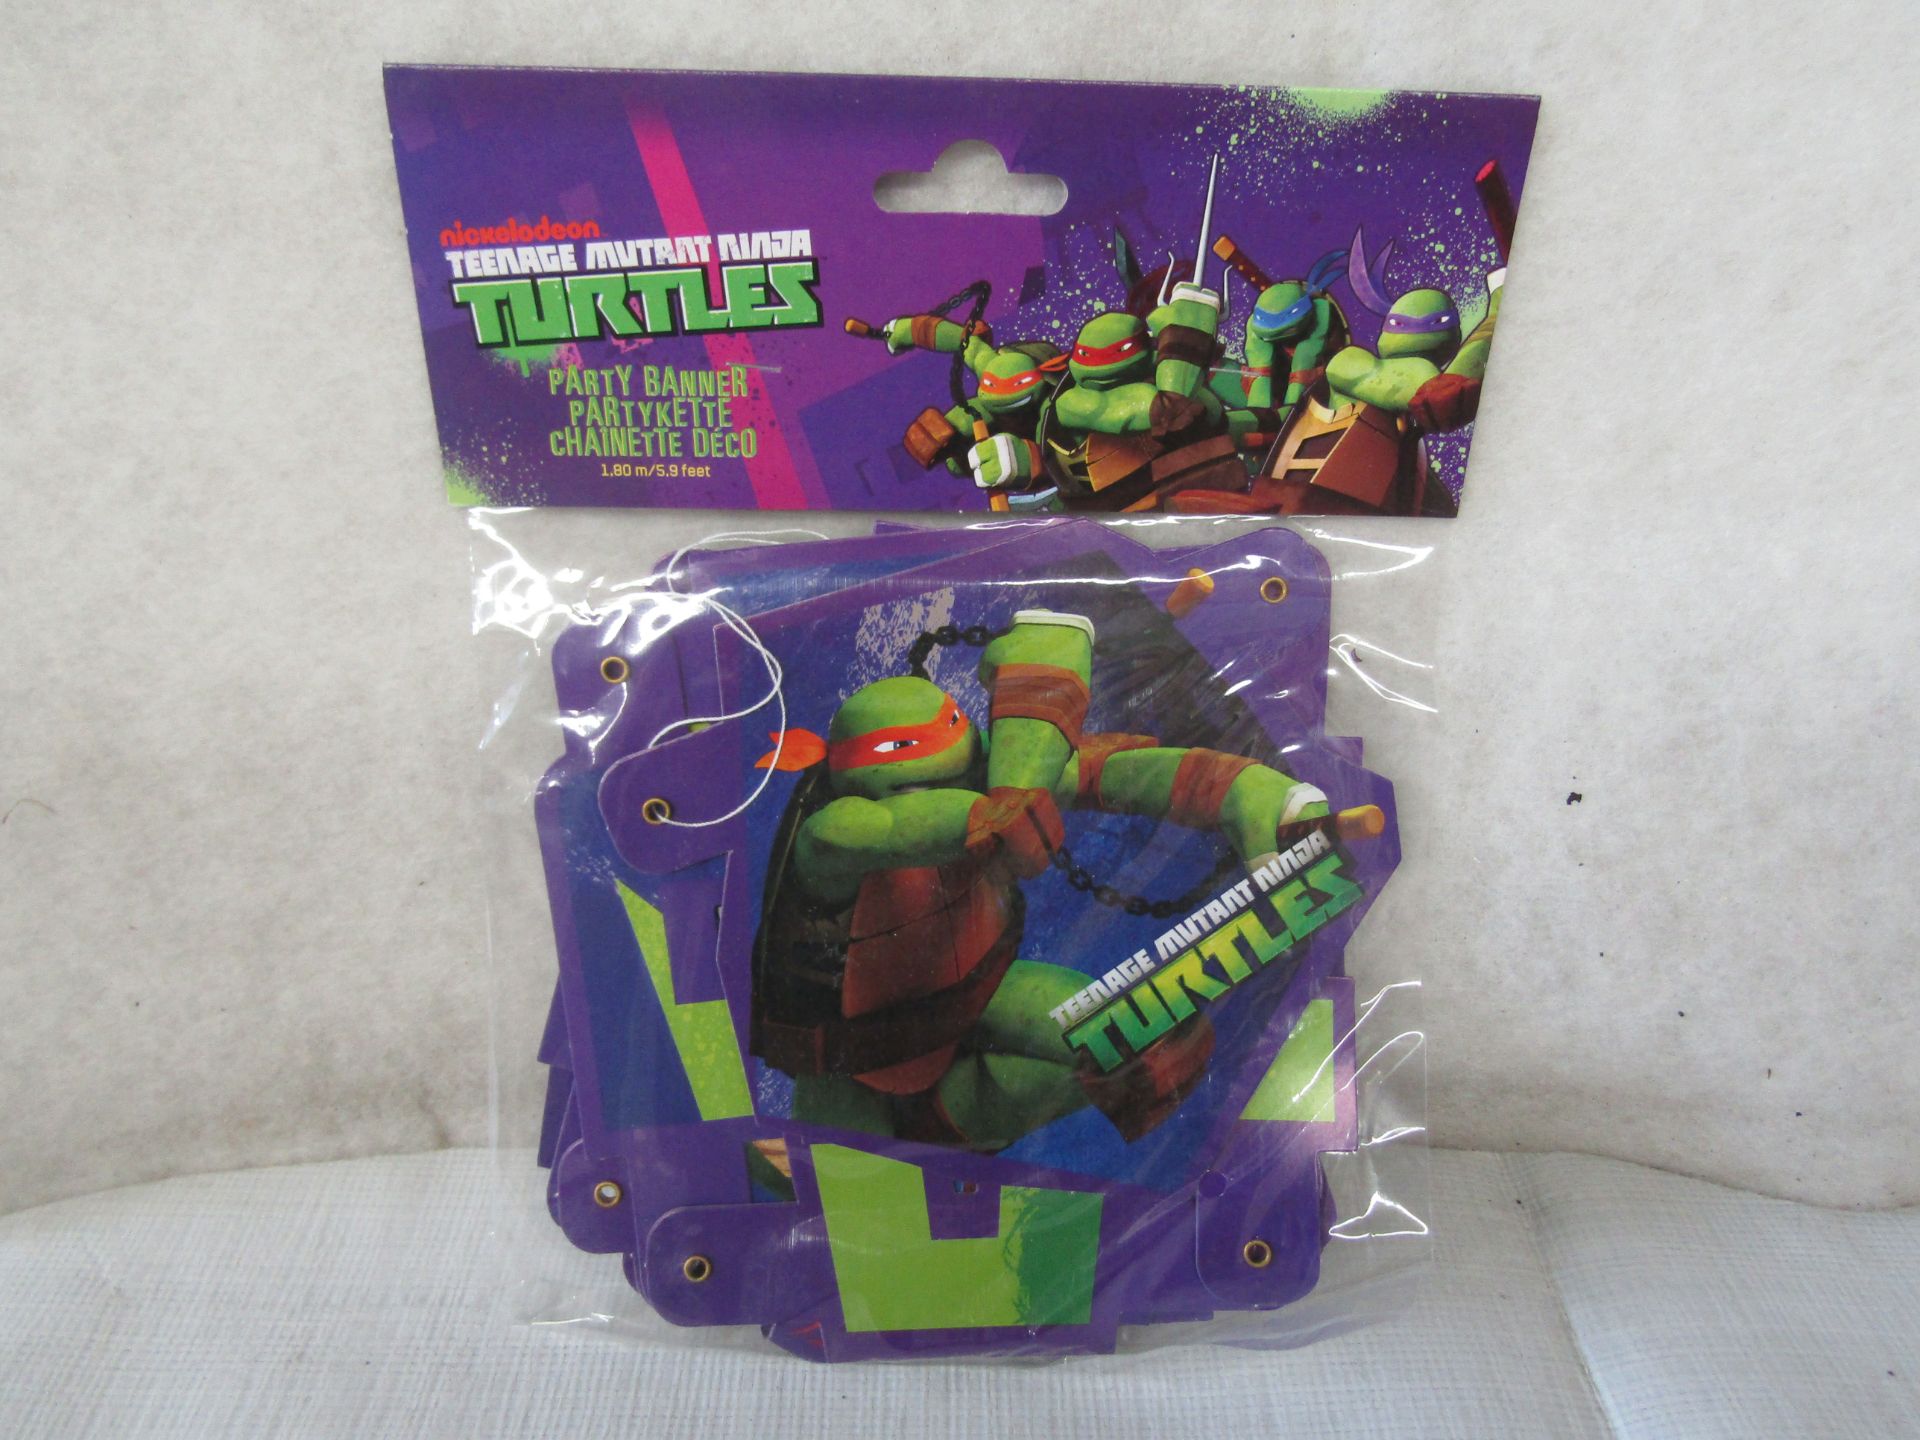 10X Teenage Mutant Ninja Turtles - Party Banner's / 5.9 Feet - New & Packaged.